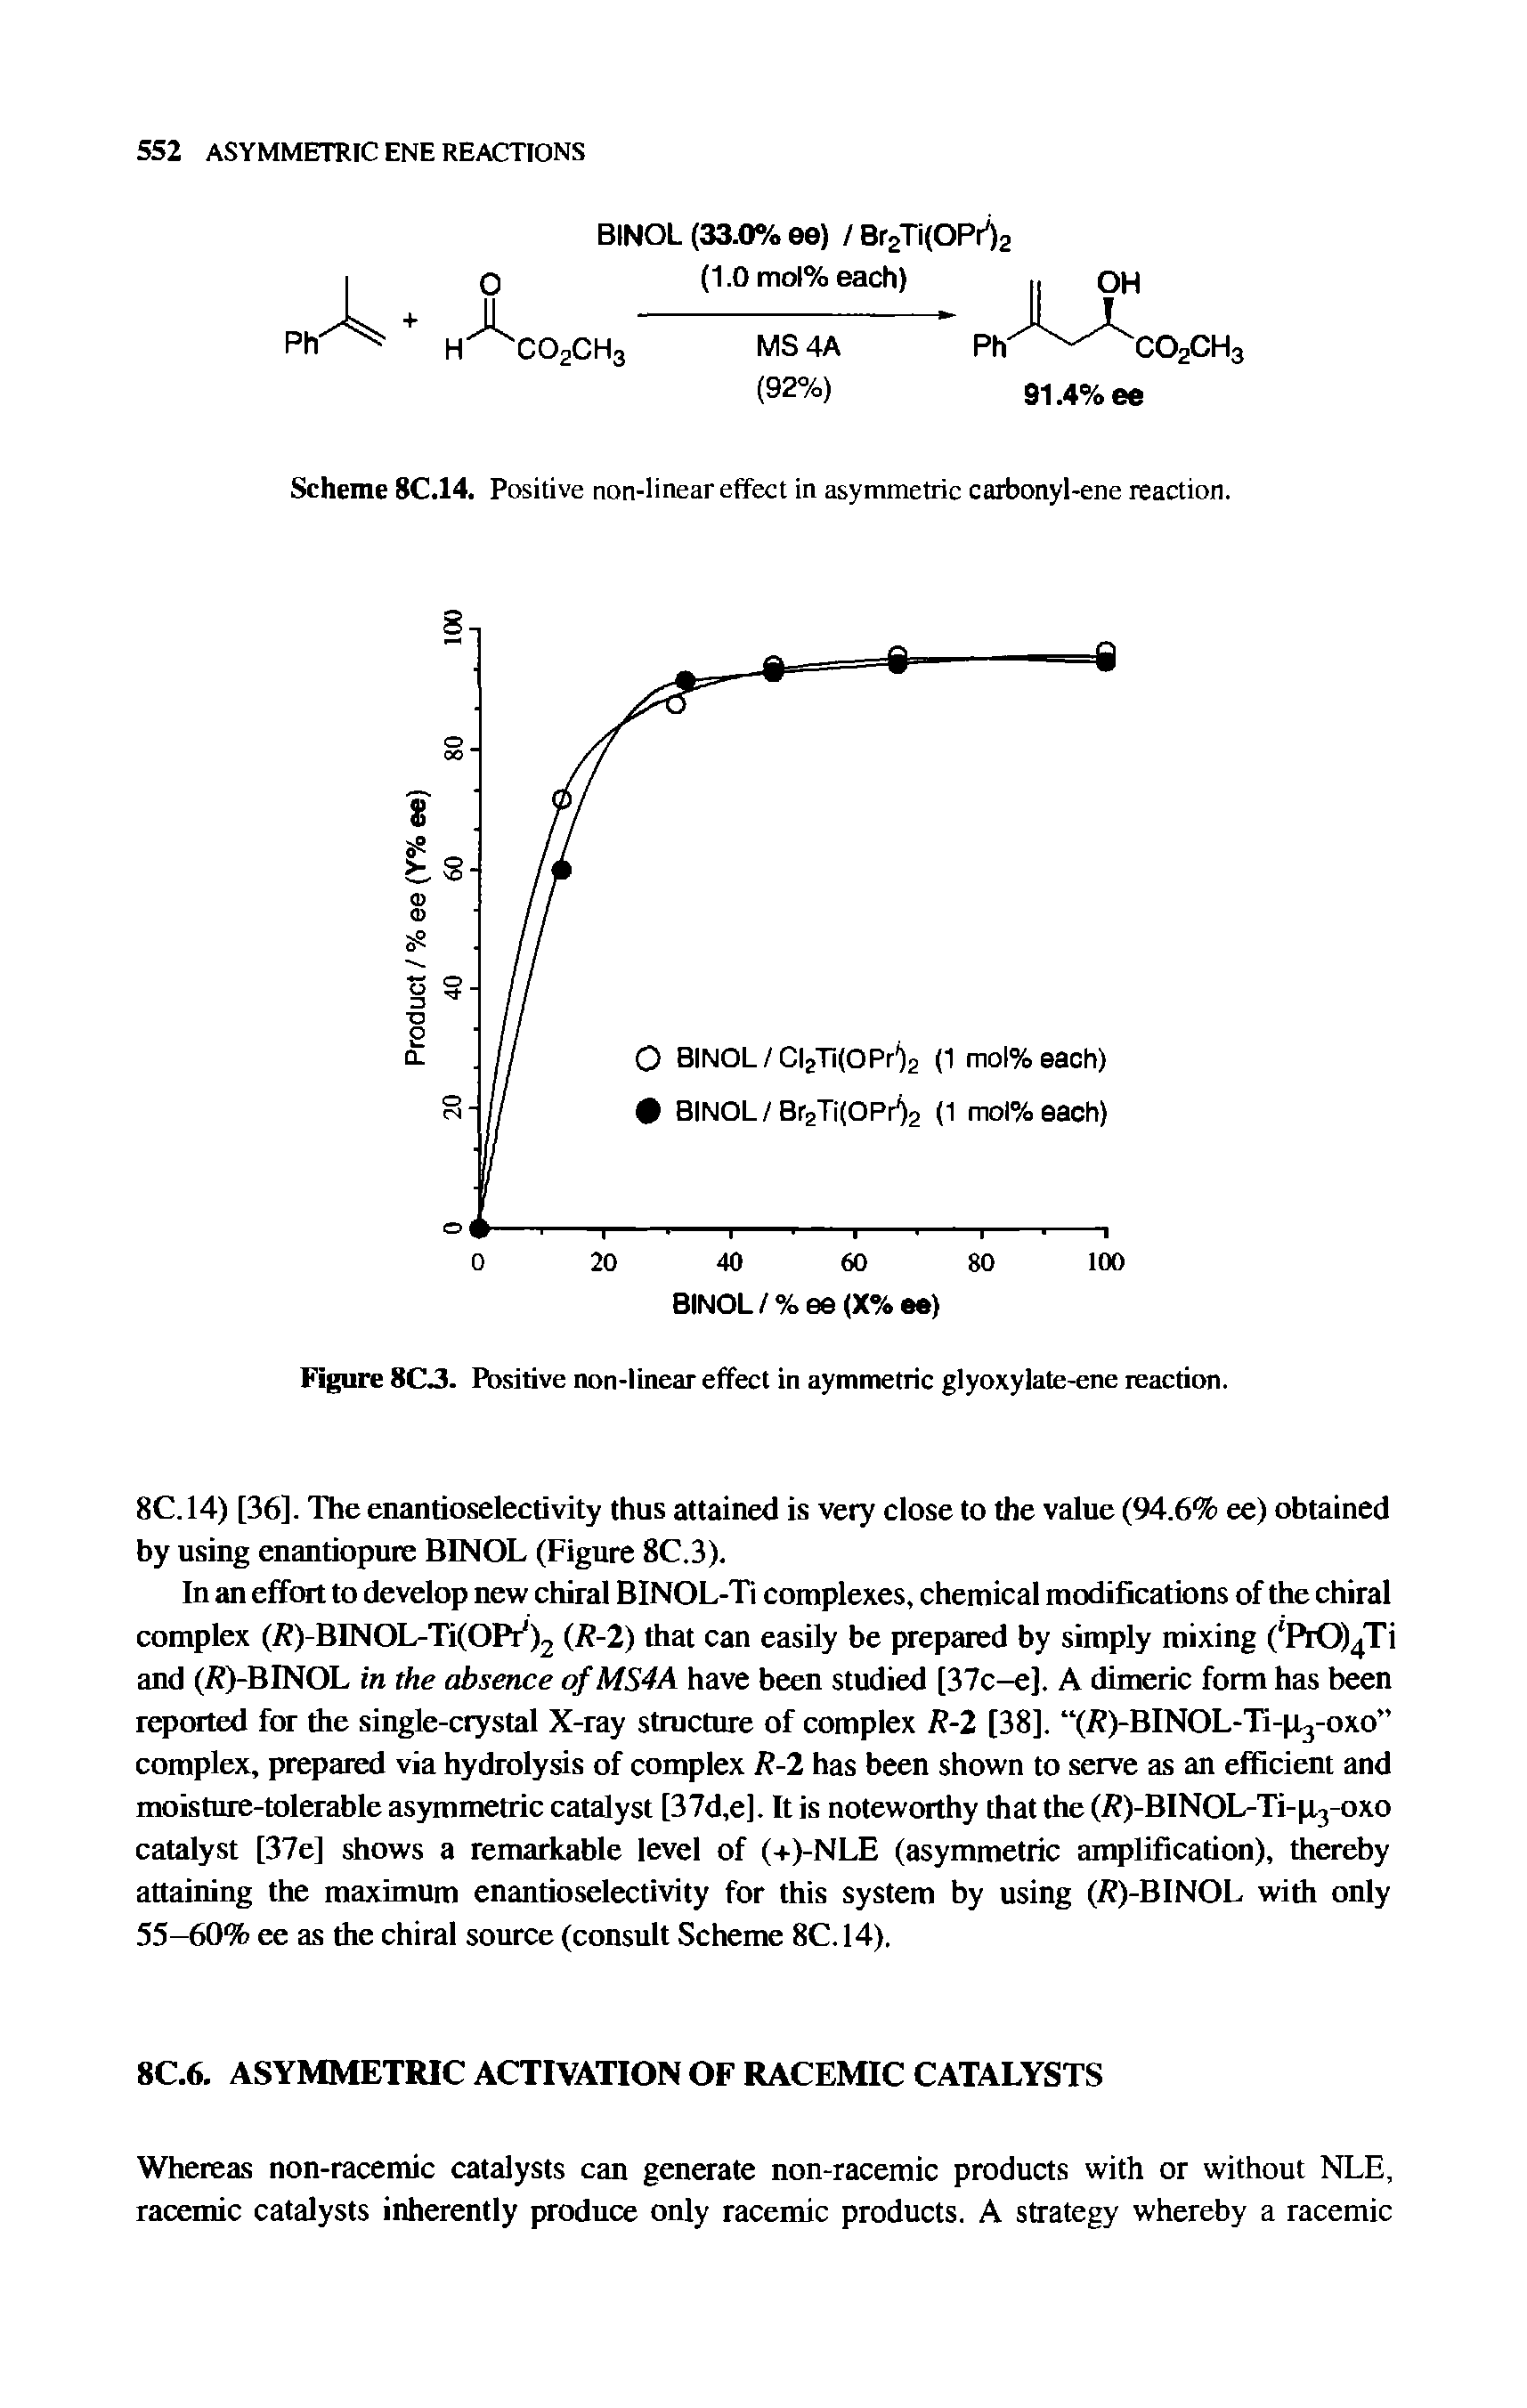 Scheme 8C.14. Positive non-linear effect in asymmetric carbonyl-ene reaction.